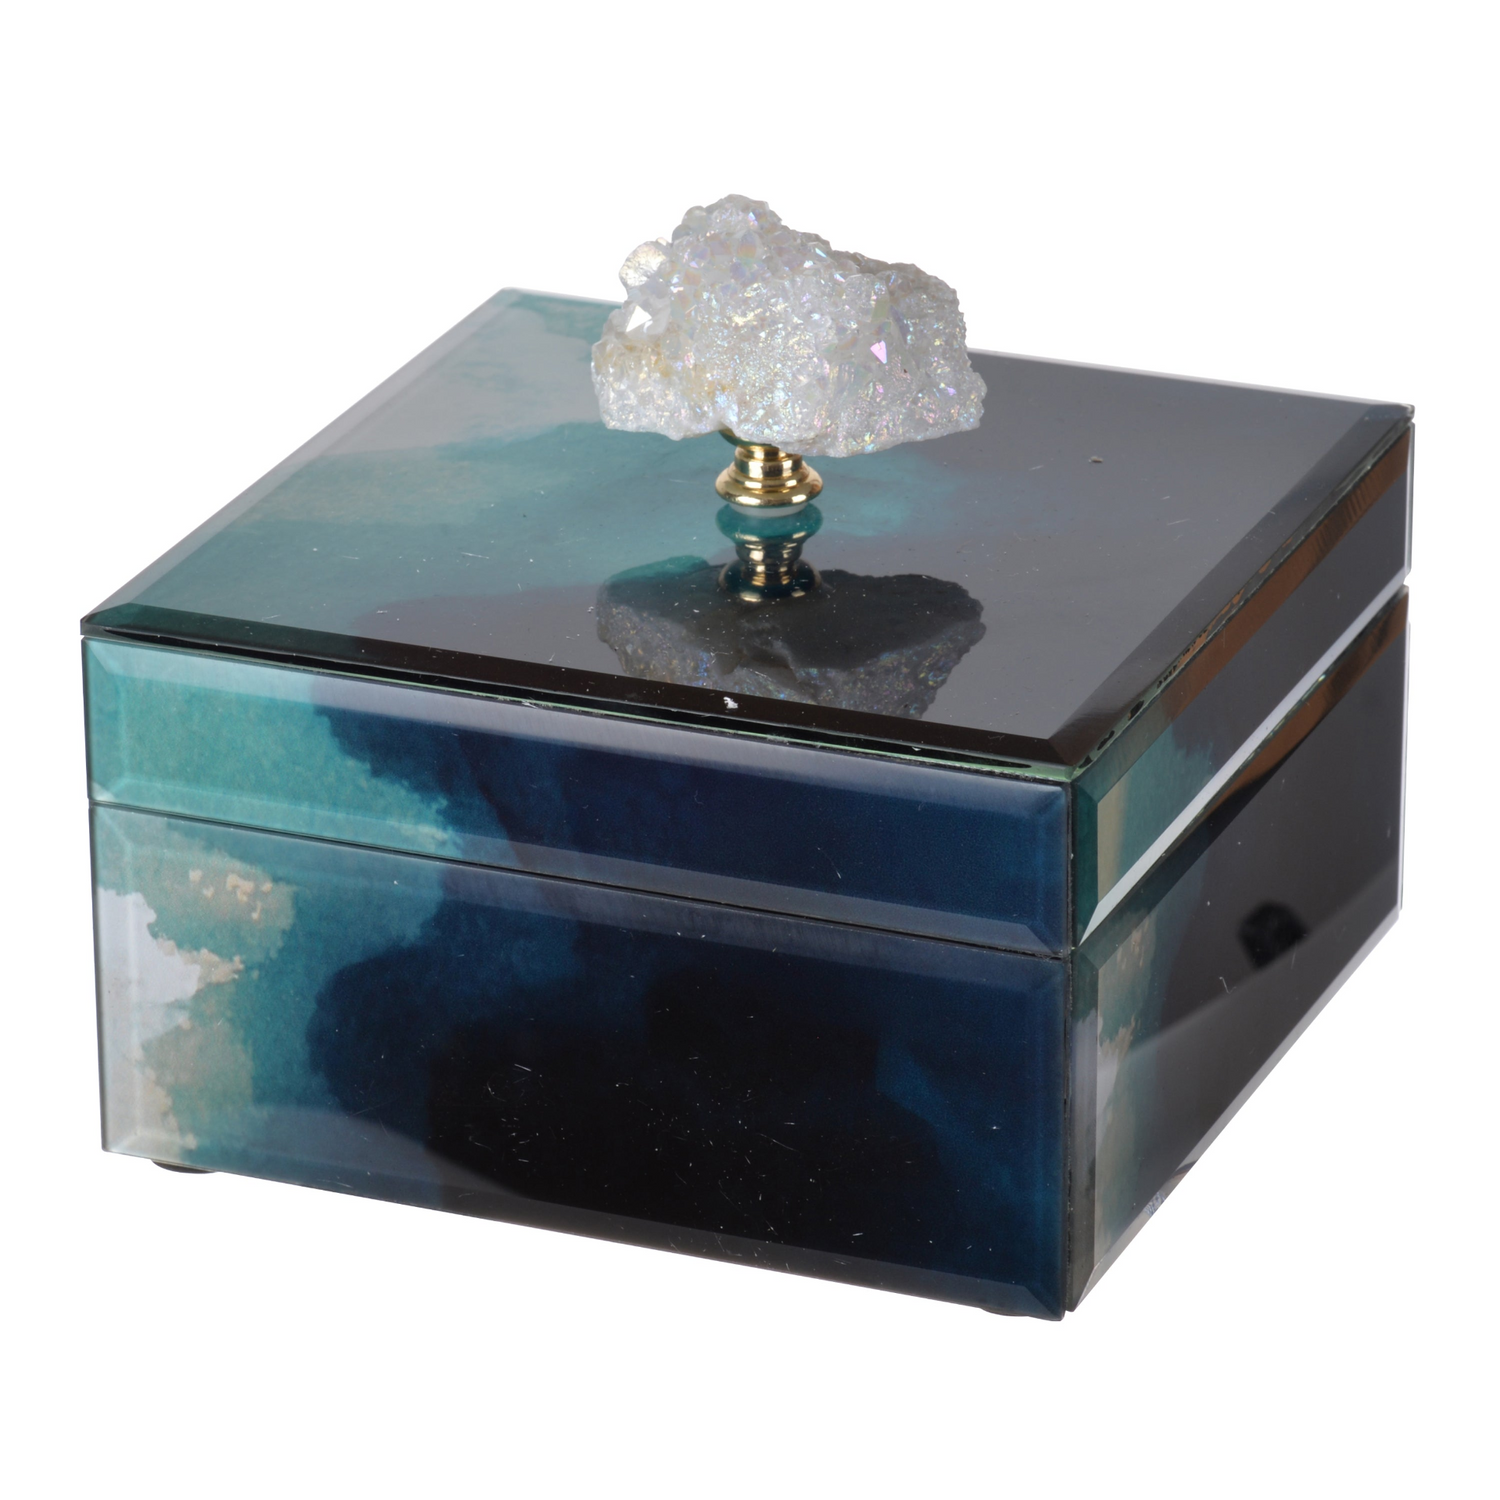 6" x 6" x 5" Bethany Aqua Jewelry Box, Stackable Decorative Storage Boxes With Lids, Goodies N Stuff